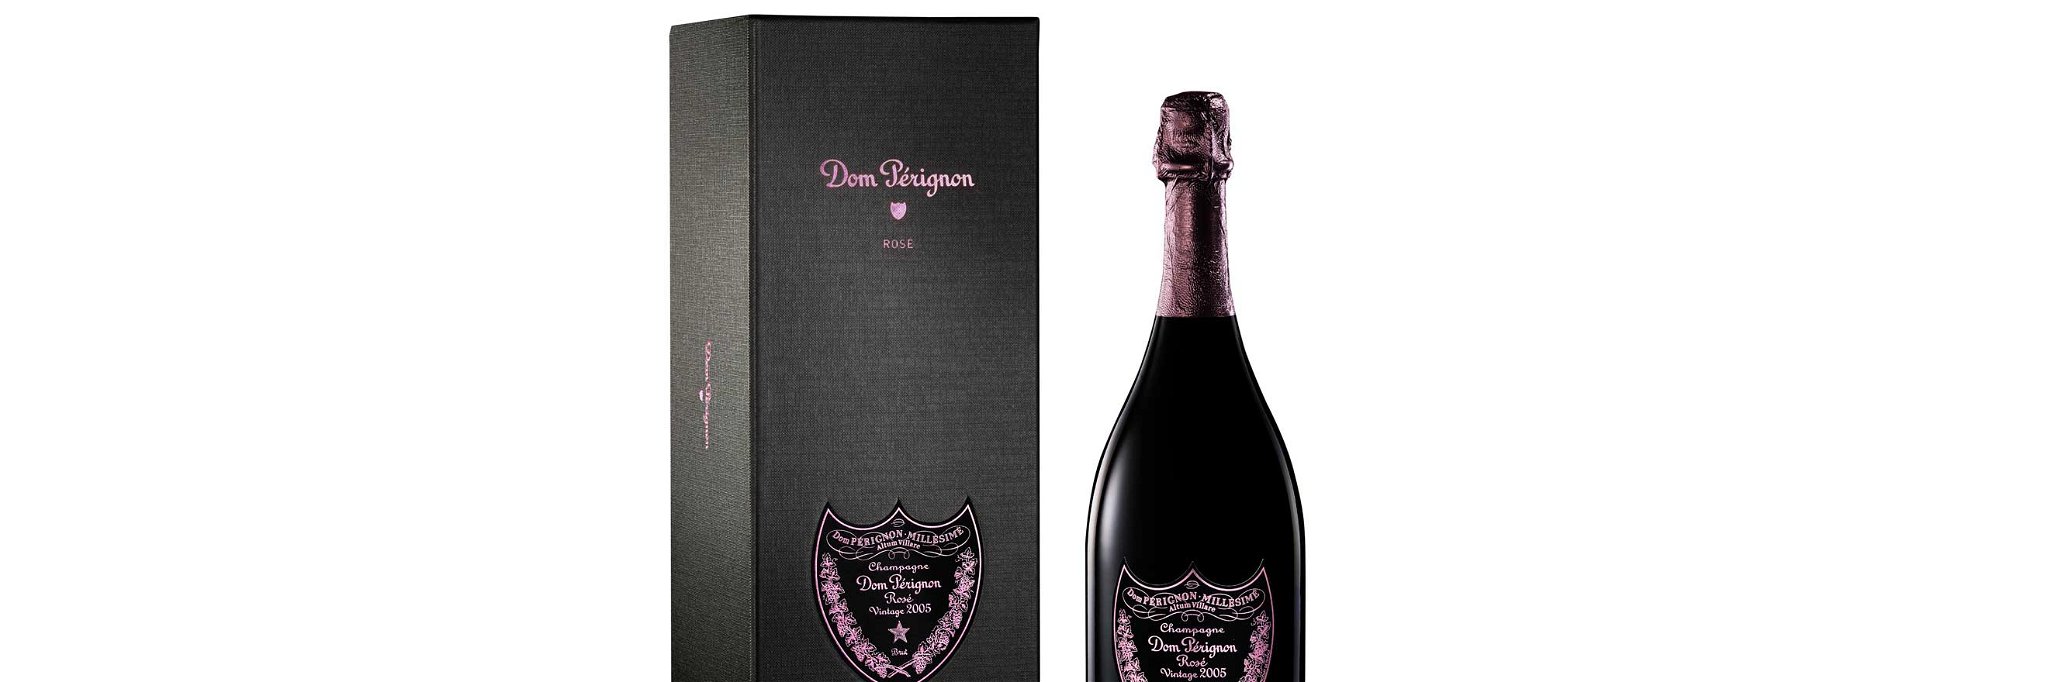 Der neue Dom Pérignon Rosé 2005.